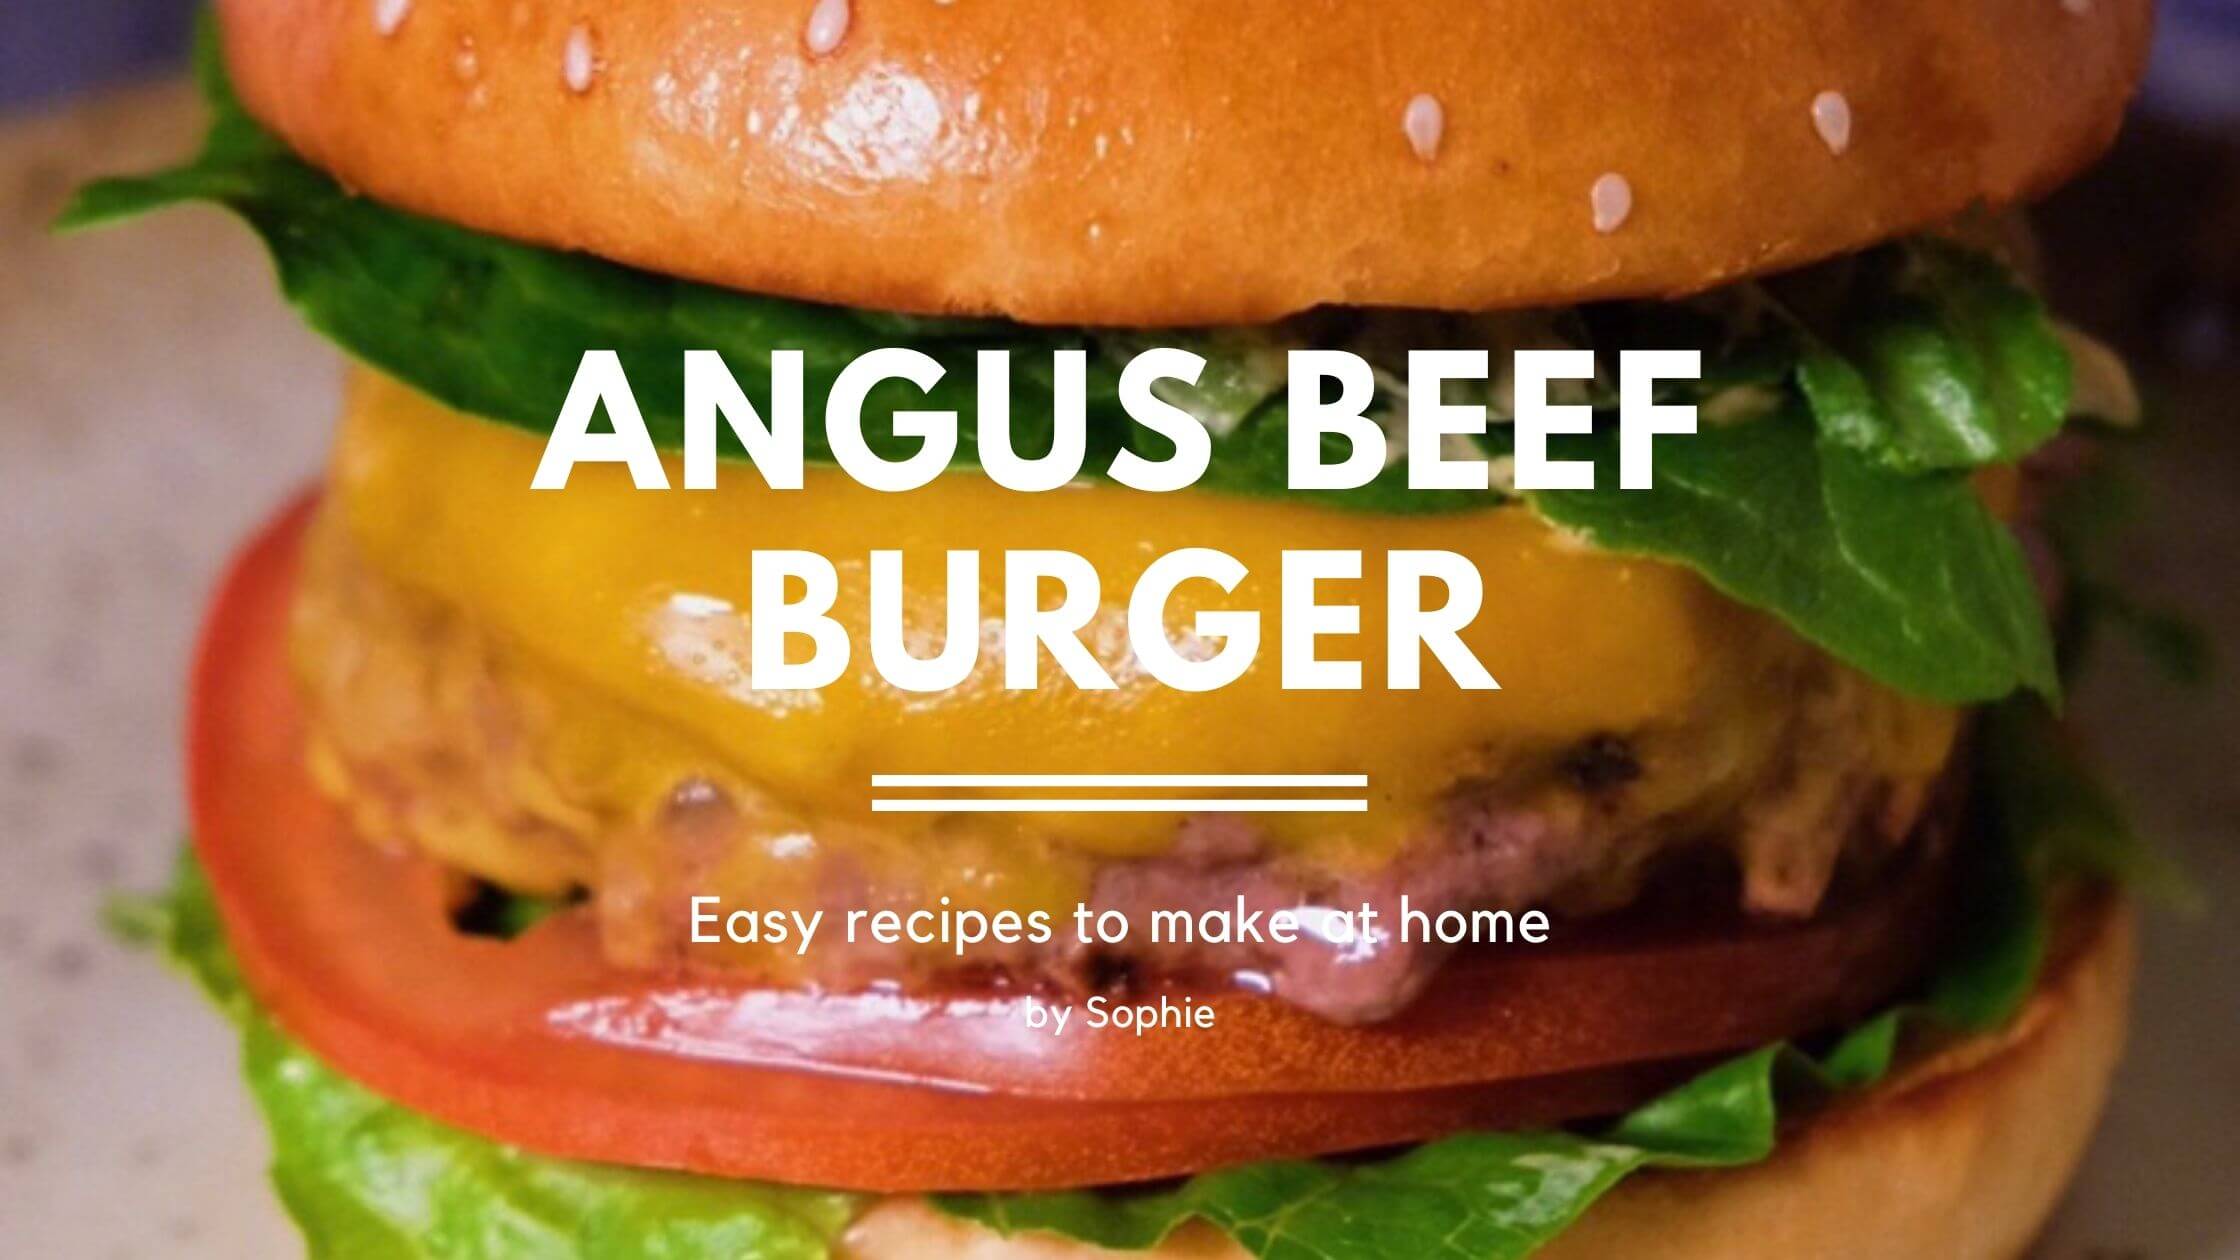 Angus beef burger recipe